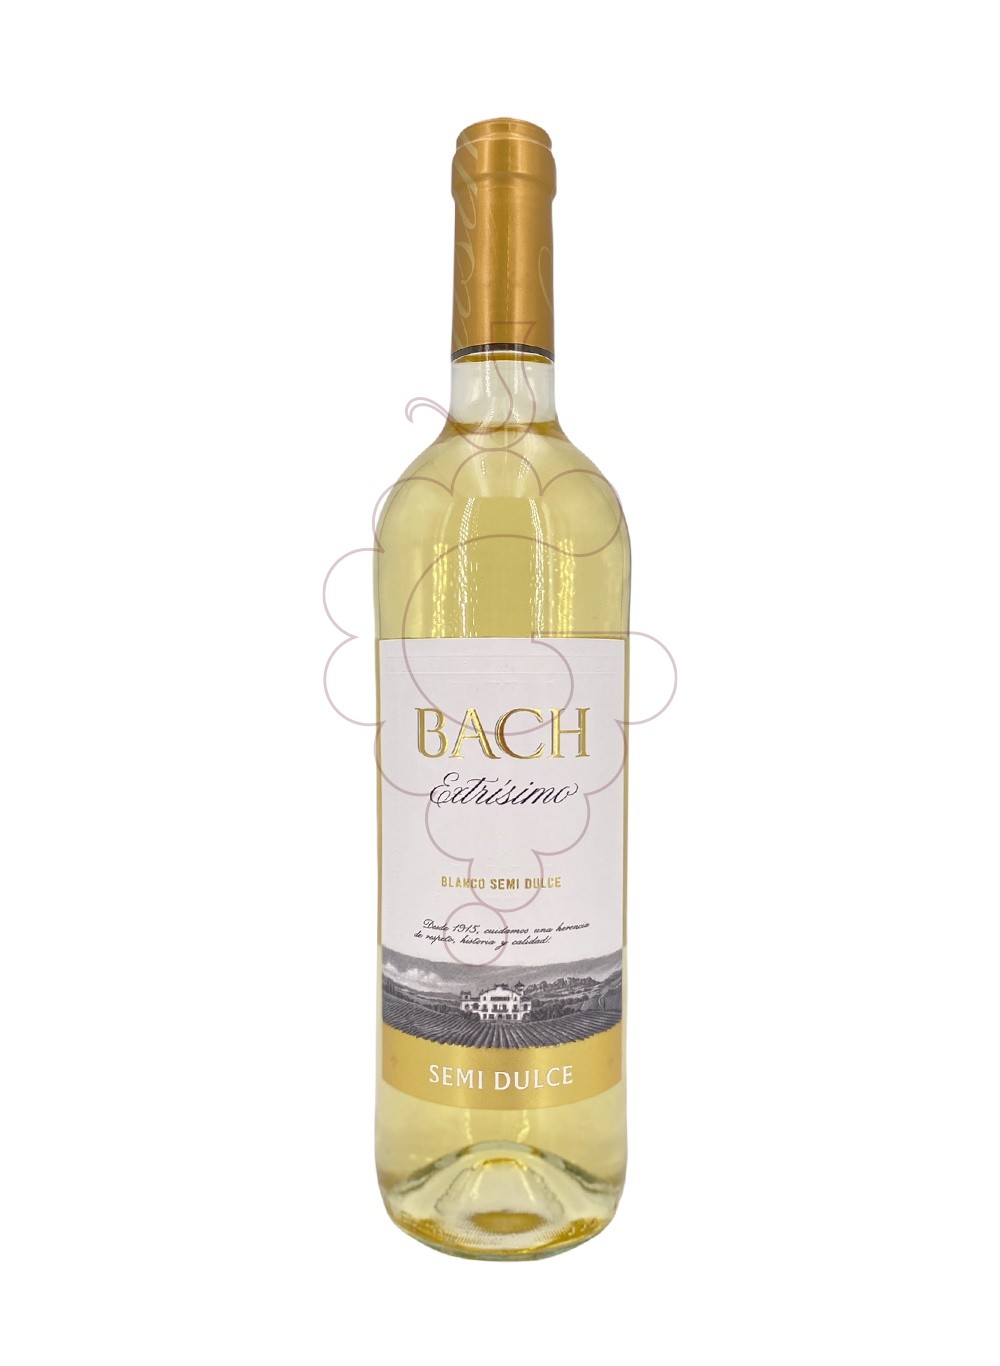 Photo Sweet White Bach white wine